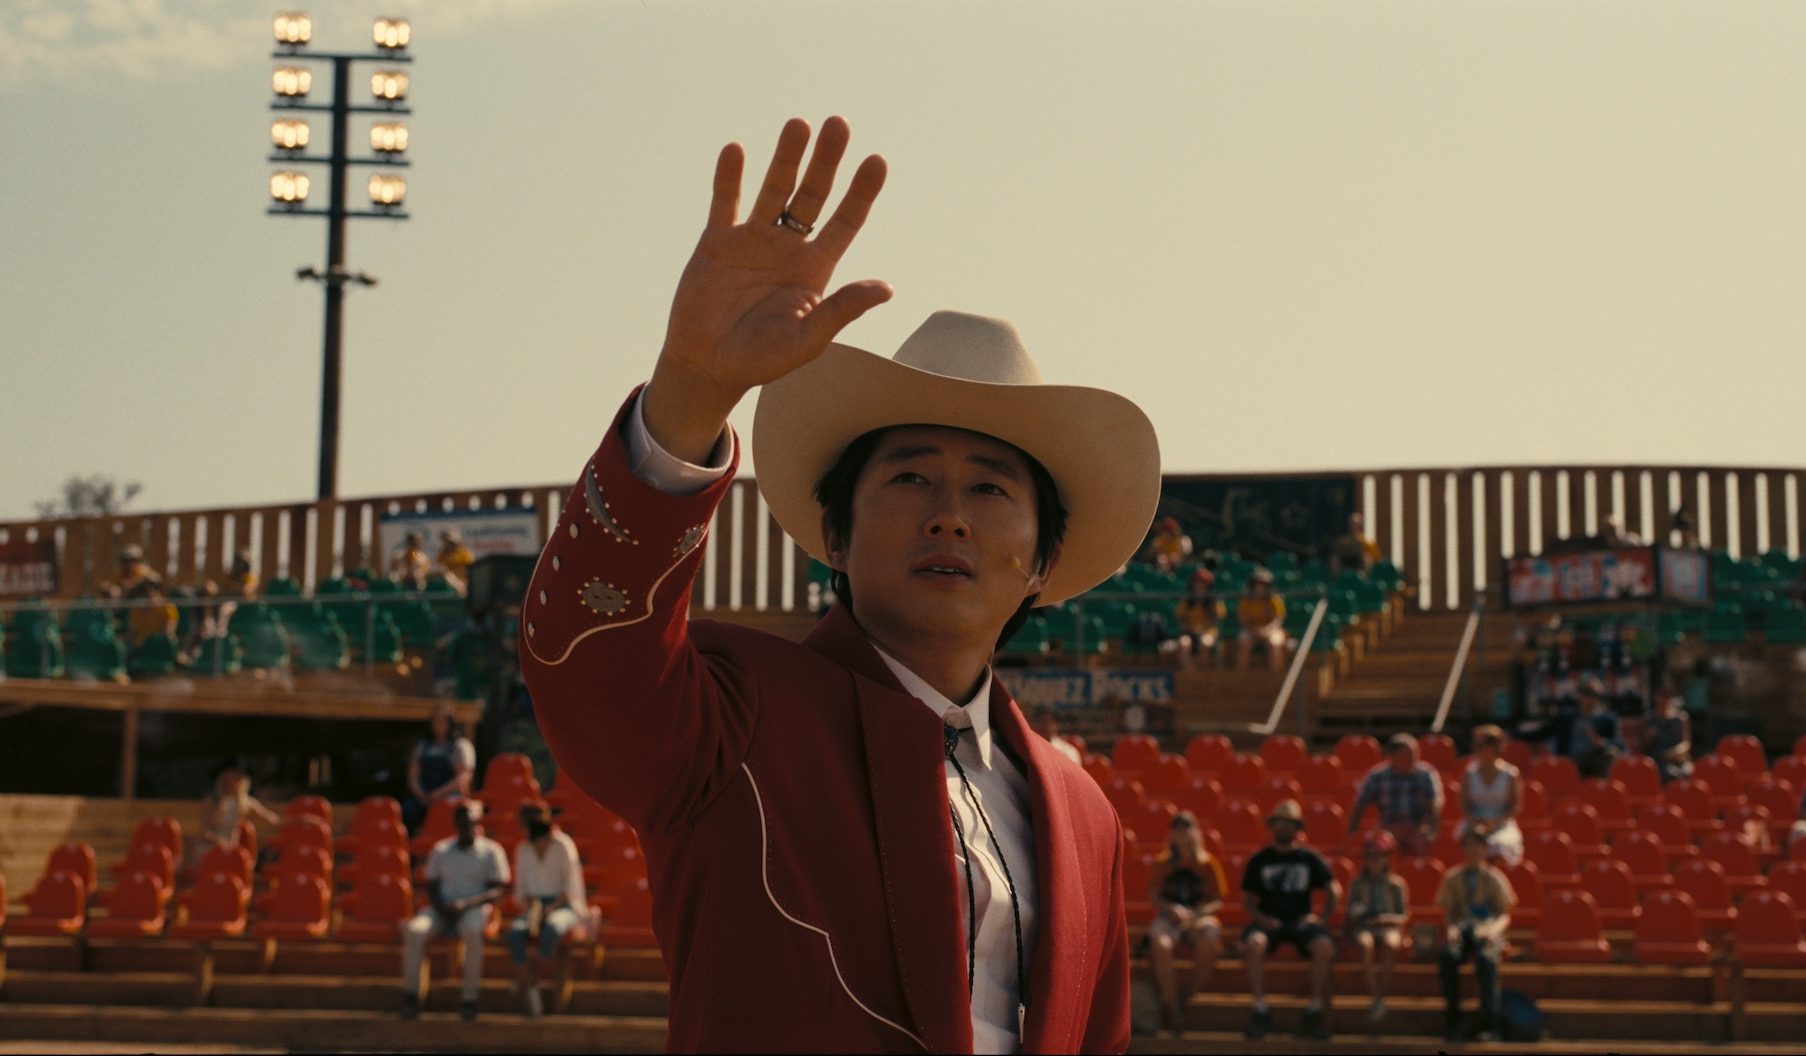 Steven Yeun as Ricky gestures up toward the sky